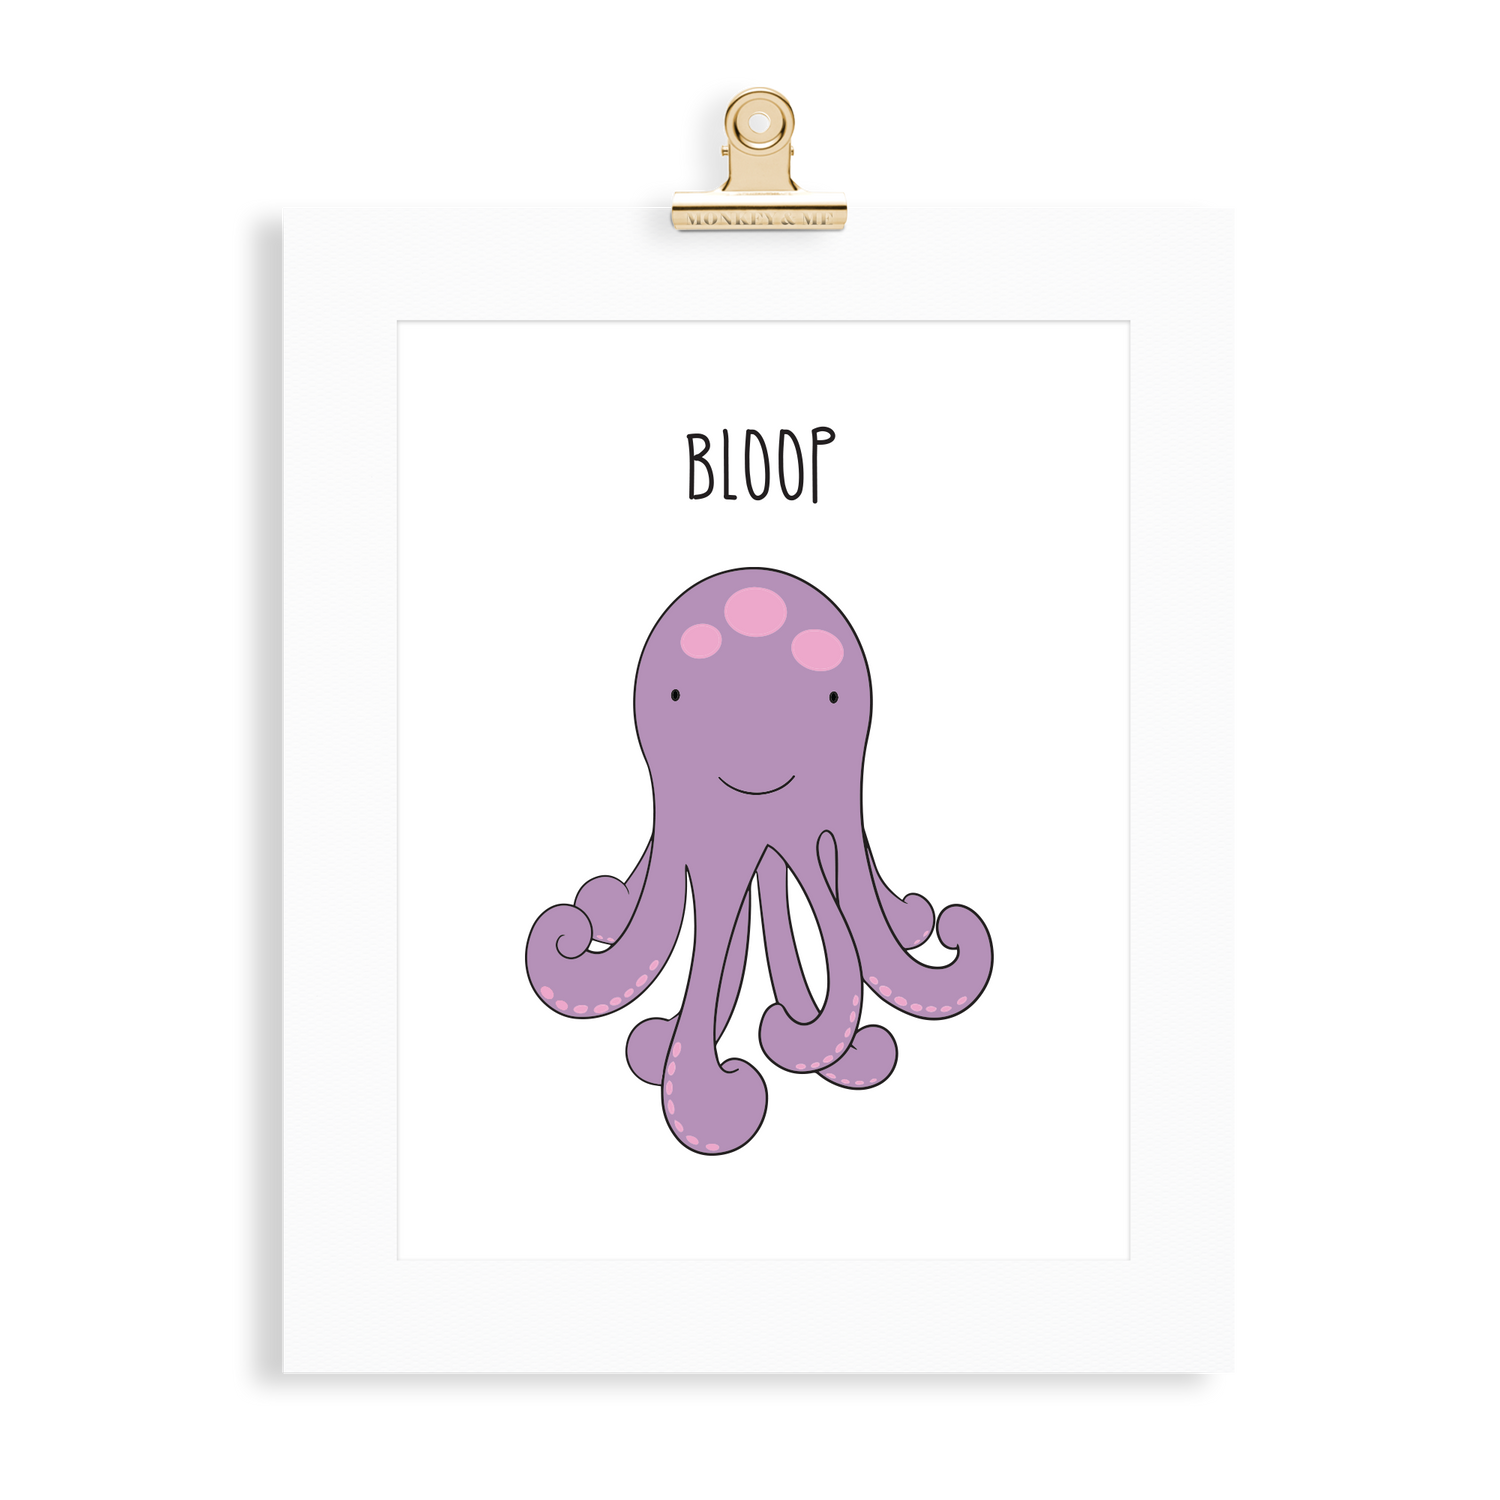 Octopus print  (A5 or A4 unframed) - Monkey & Me UK